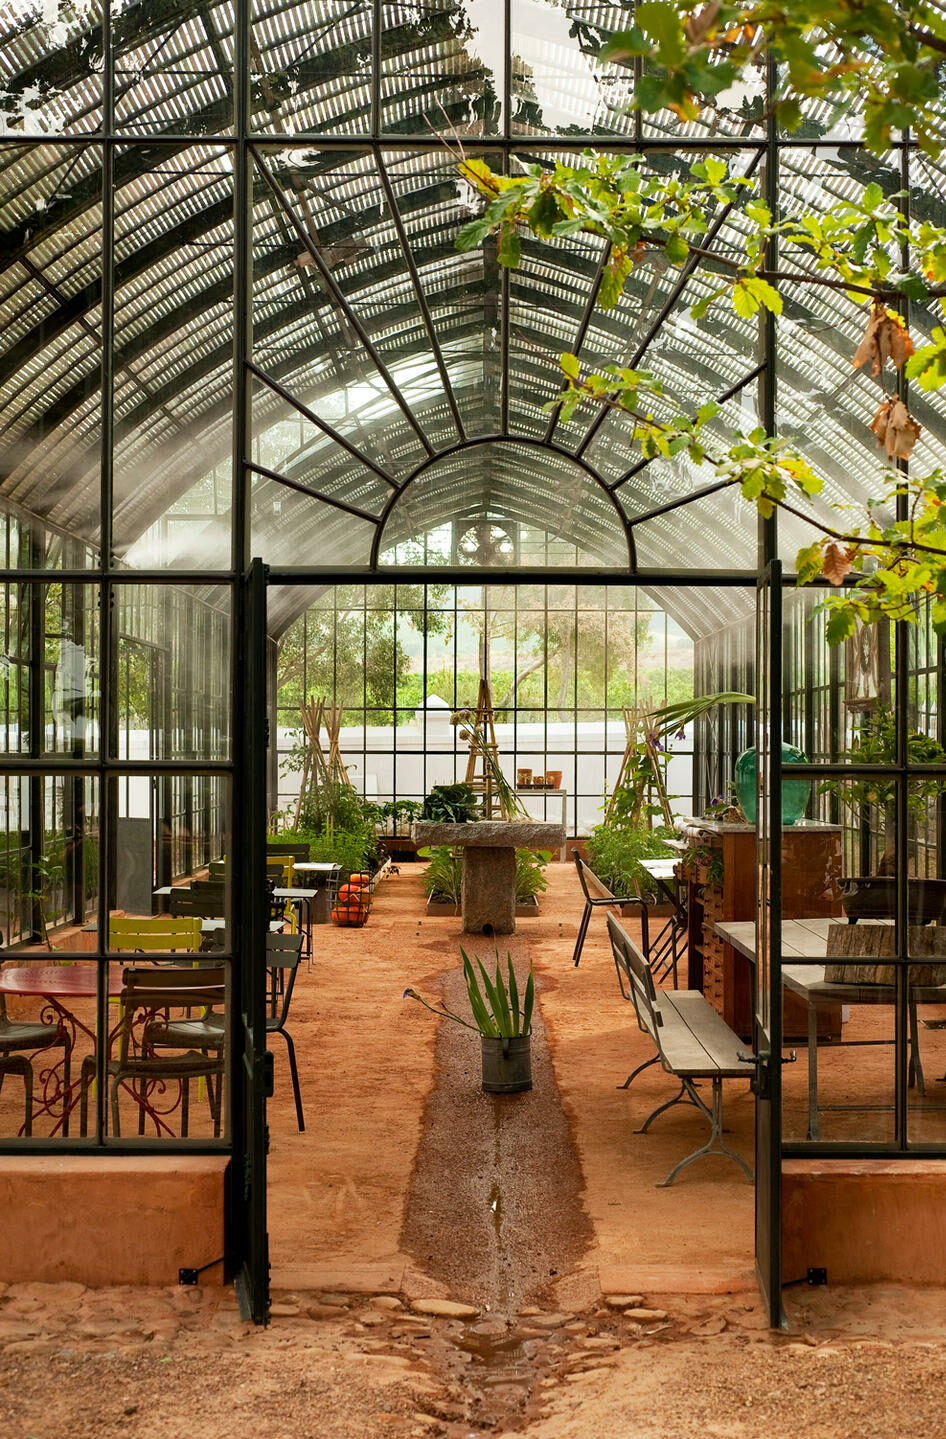 1.tearoom In Greenhouse